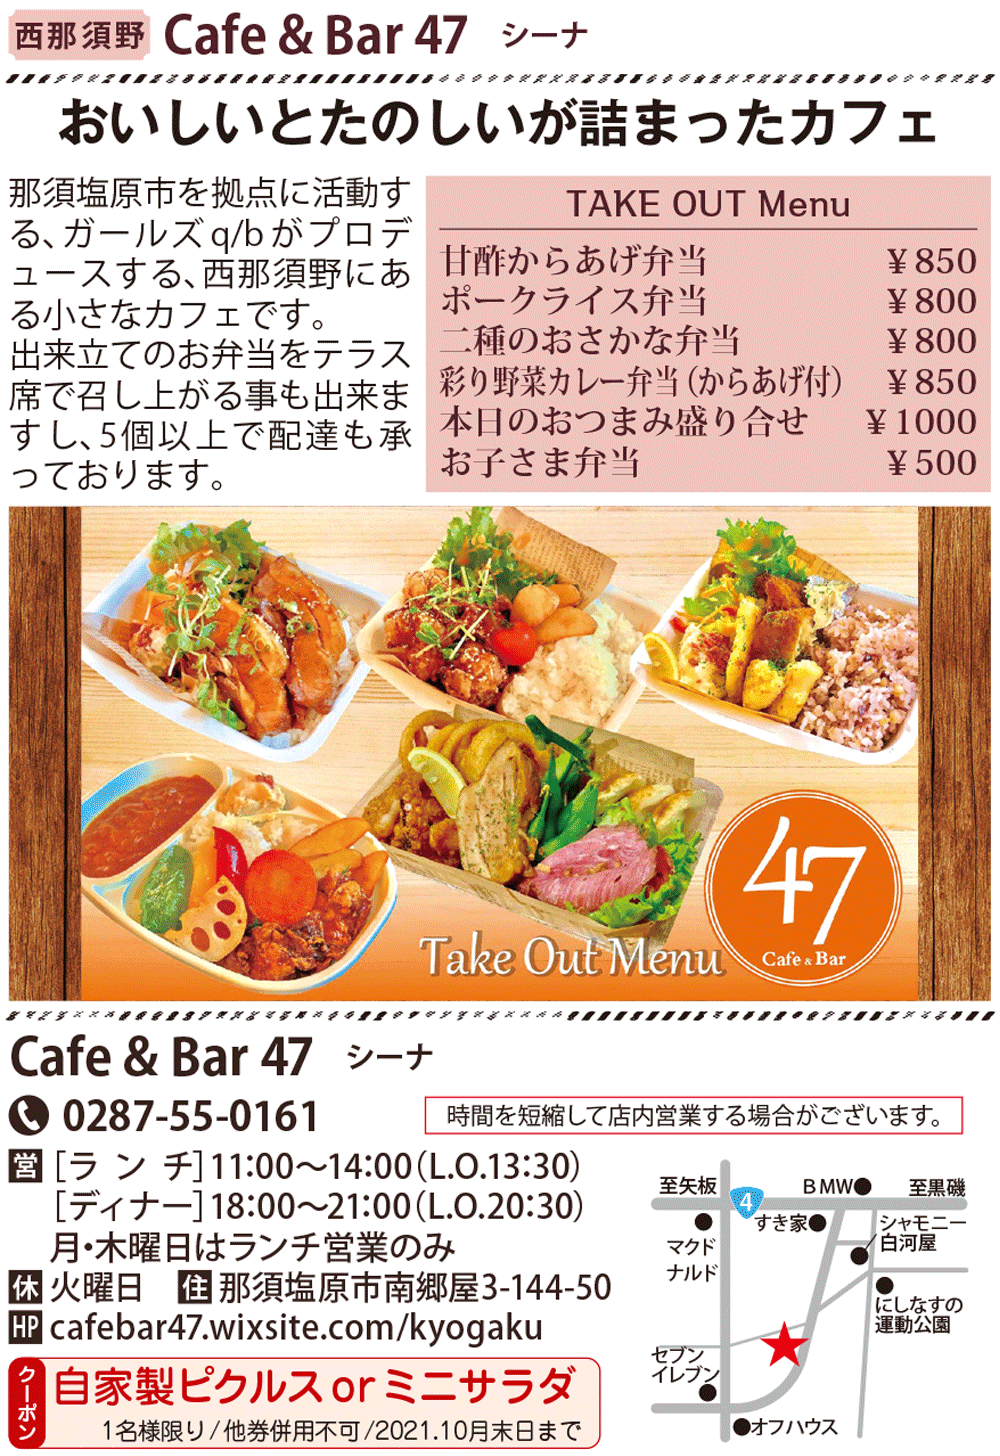 Cafe & Bar 47